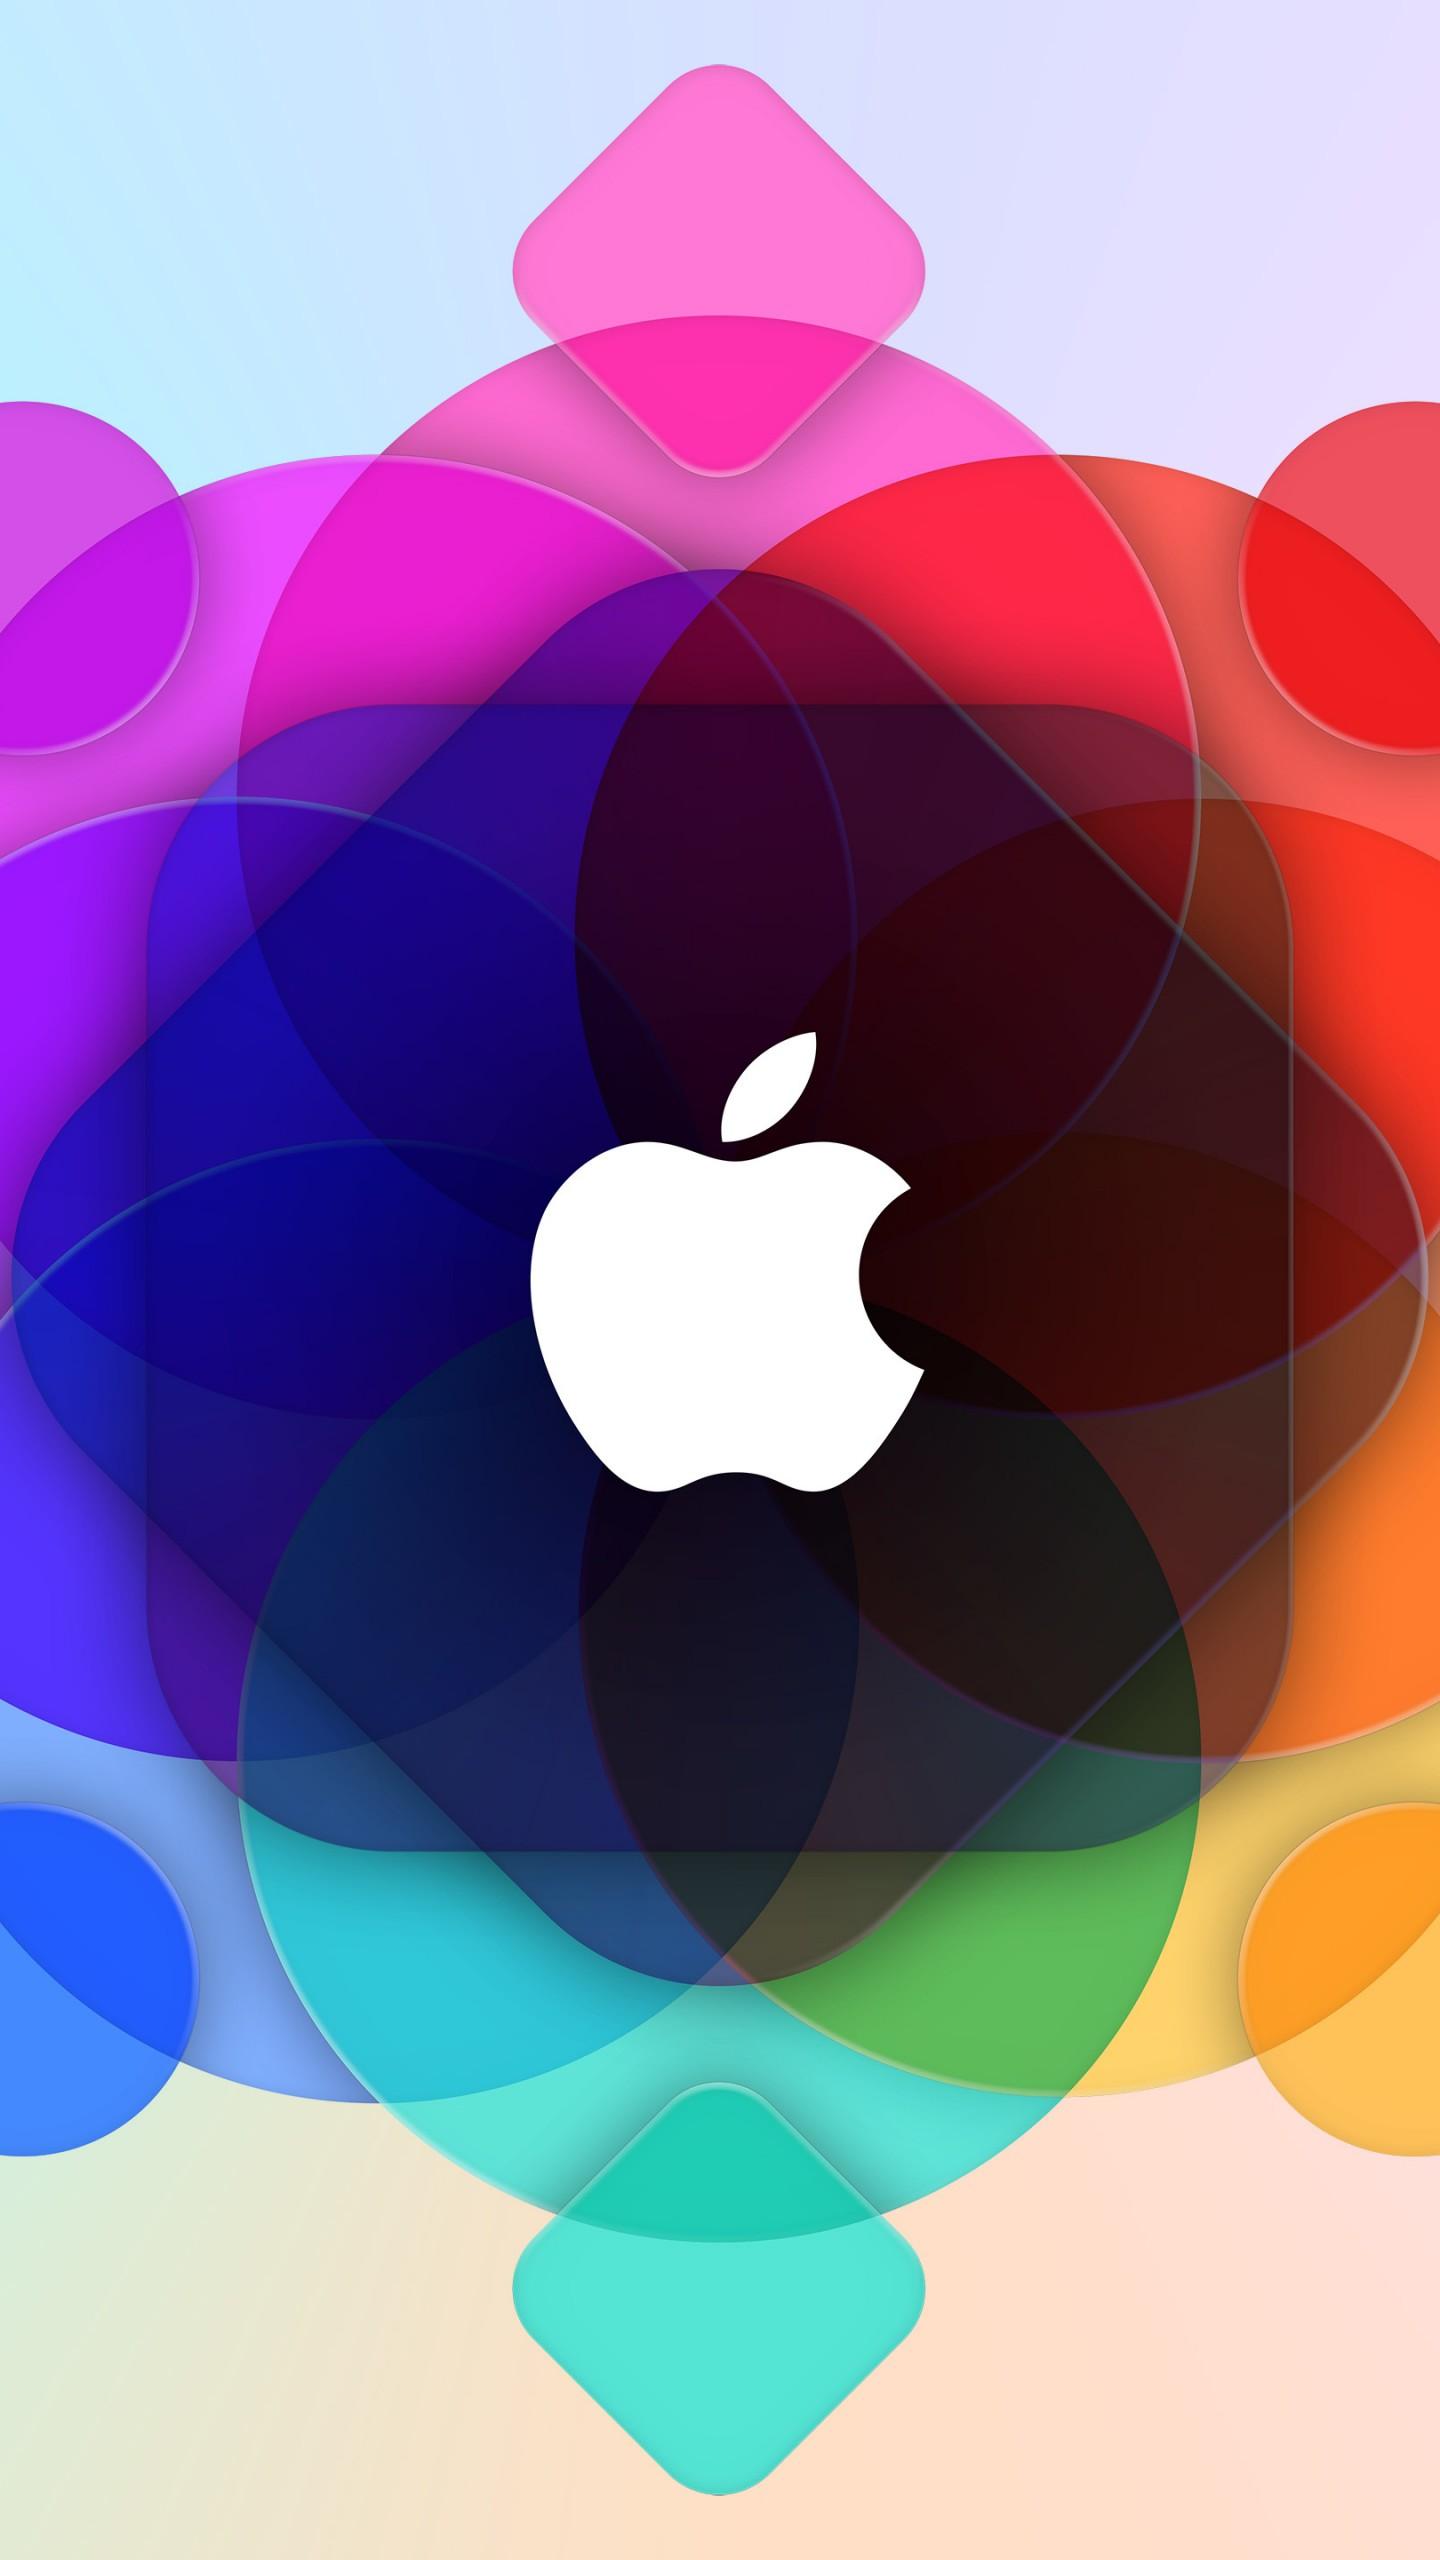 Apple iPhone Symbol 4k Wallpapers - Wallpaper Cave